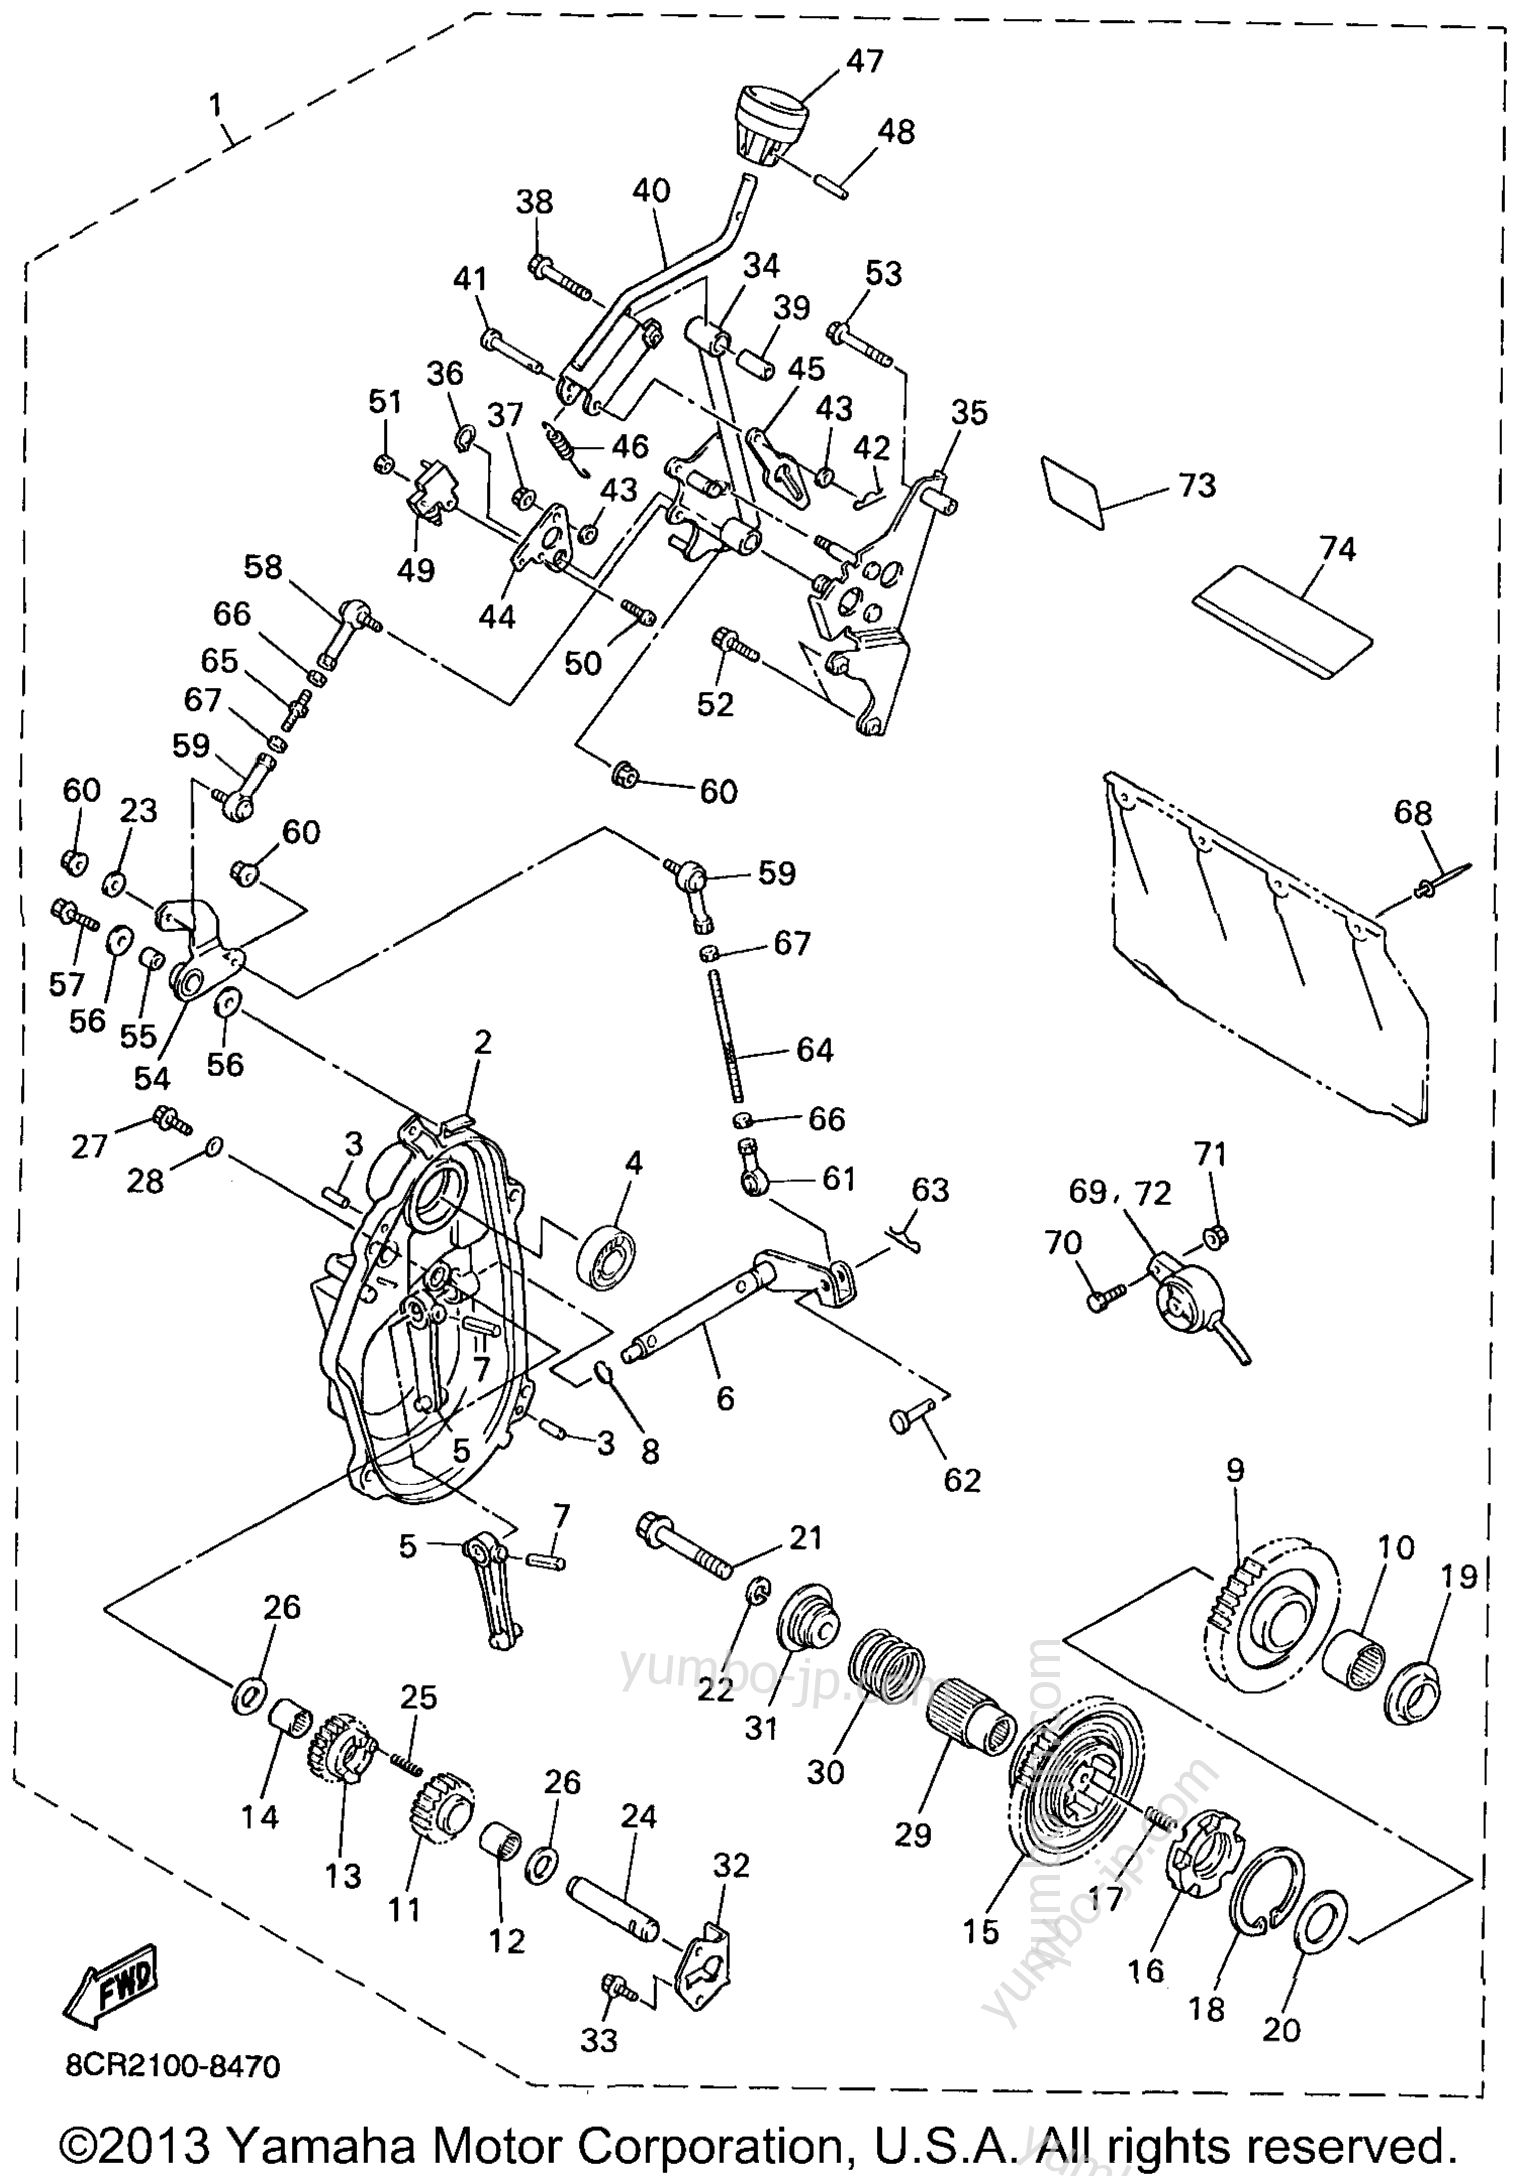 Alternate Reverse Gear Kit for snowmobiles YAMAHA MOUNTAIN MAX 600 (MM600PB) 1998 year